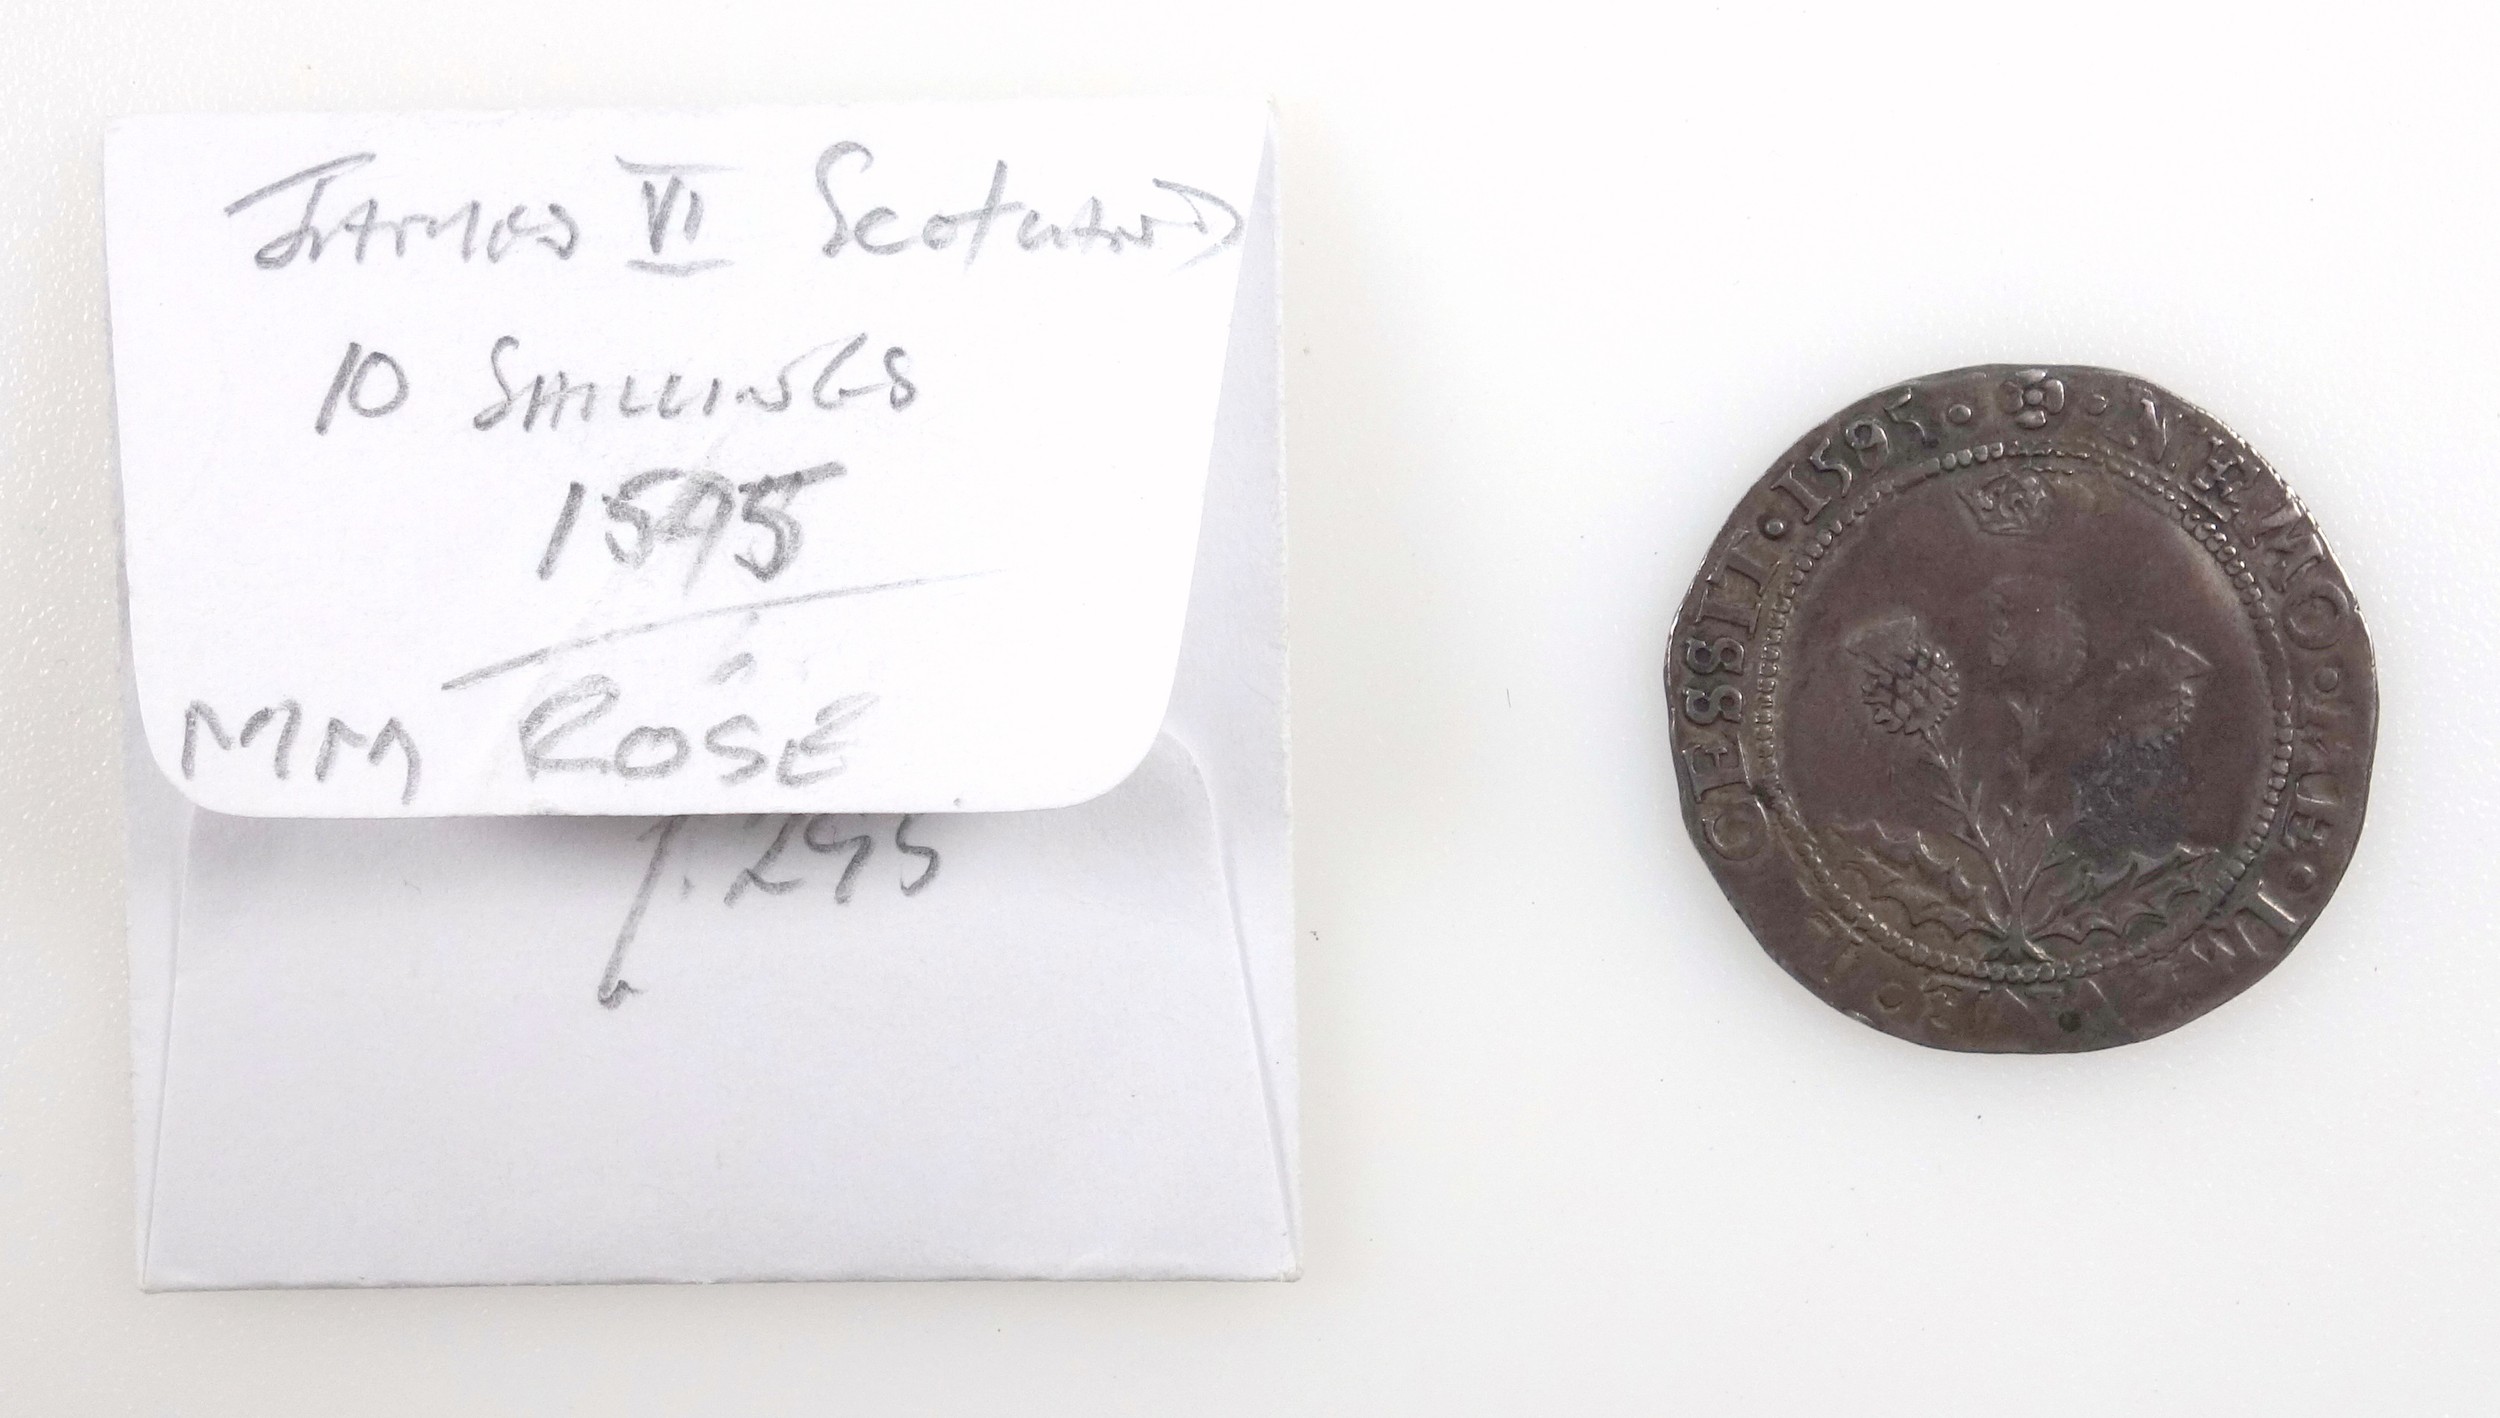 Scotland James VI 10 shillings, m.m. rose, 1595, f. - Image 4 of 4